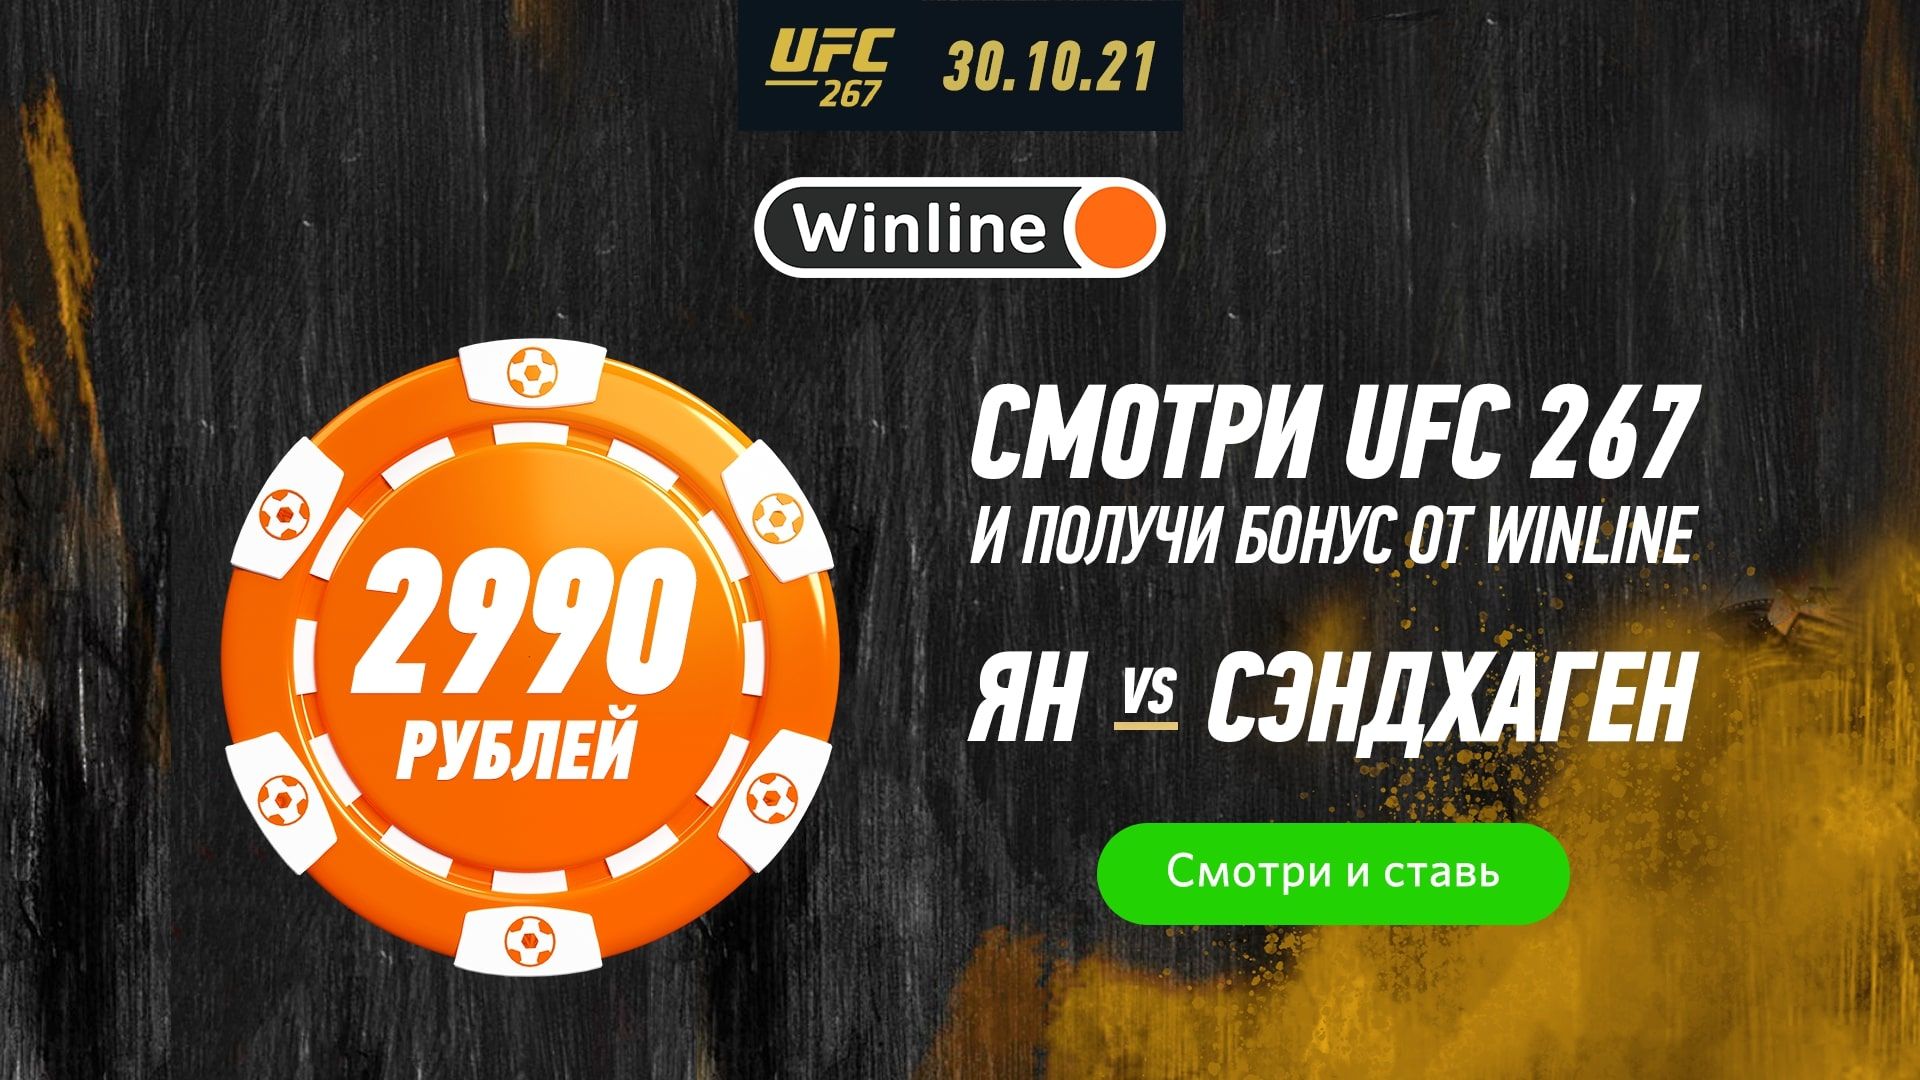 Купи подписку на MORE.TV за 299 рублей и получи фрибет от Winline 2990 рублей